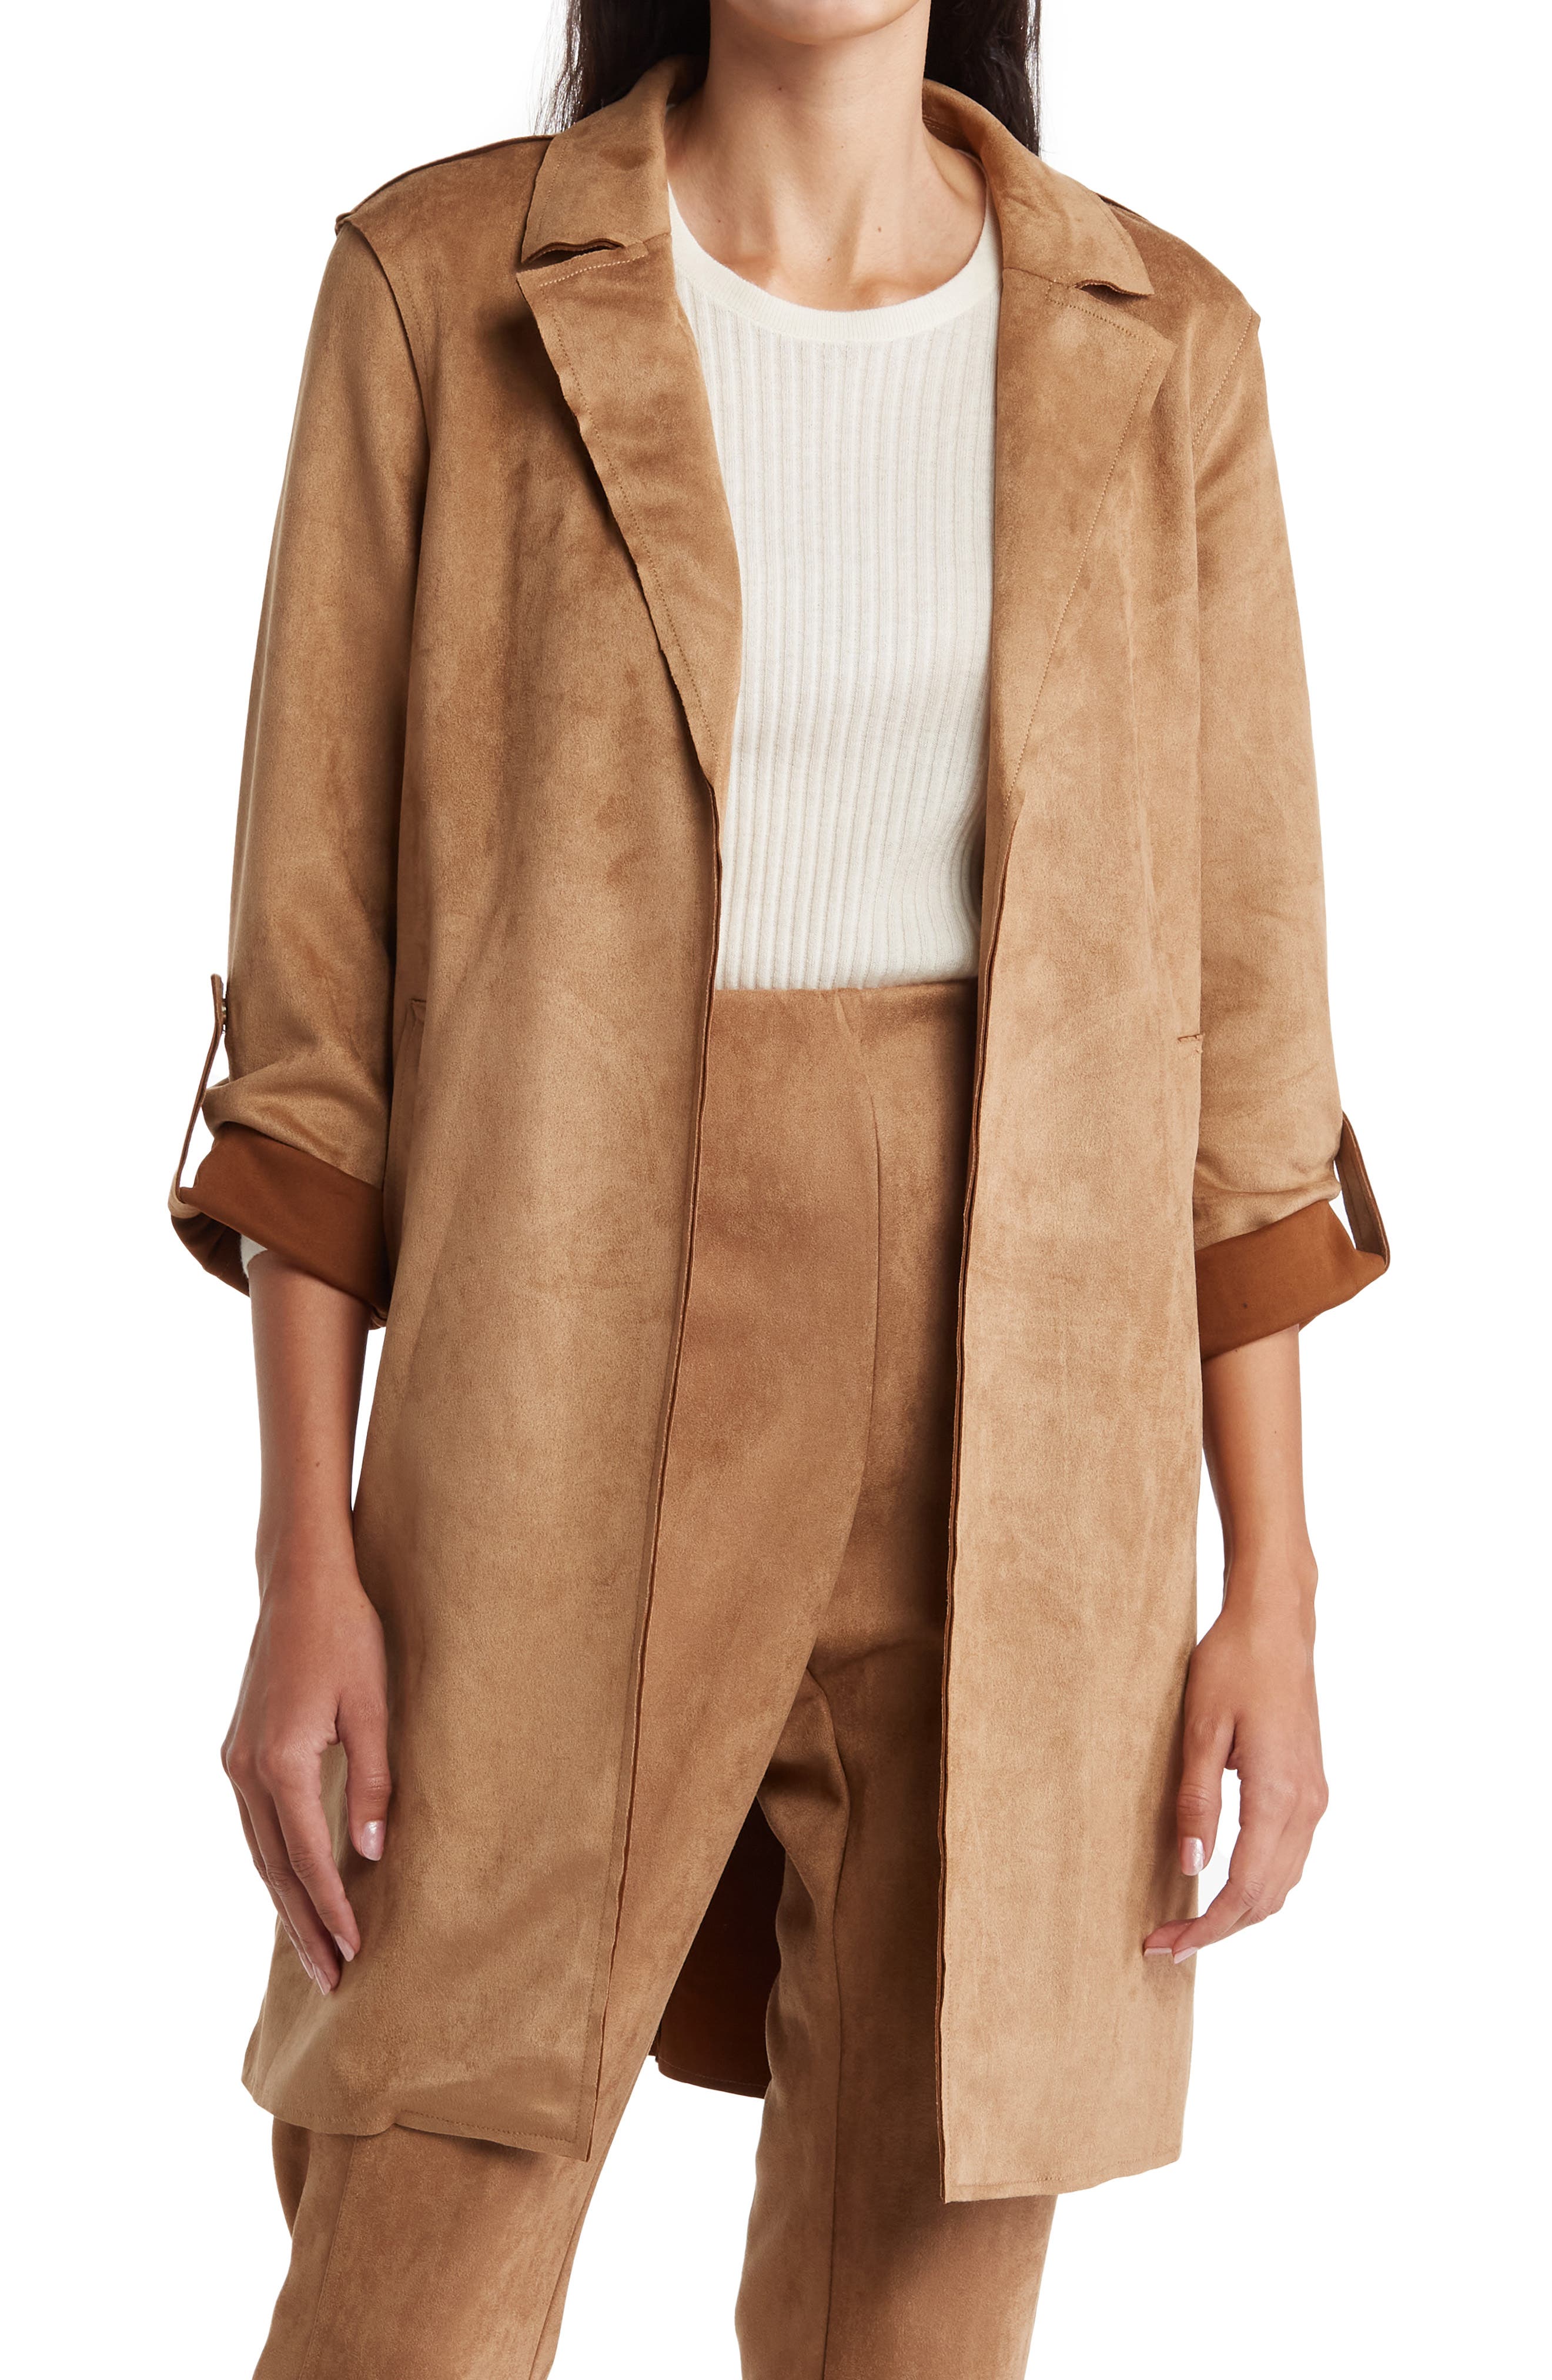 discount 55% Azulé Long coat WOMEN FASHION Coats Long coat Suede leather Gray/White S 